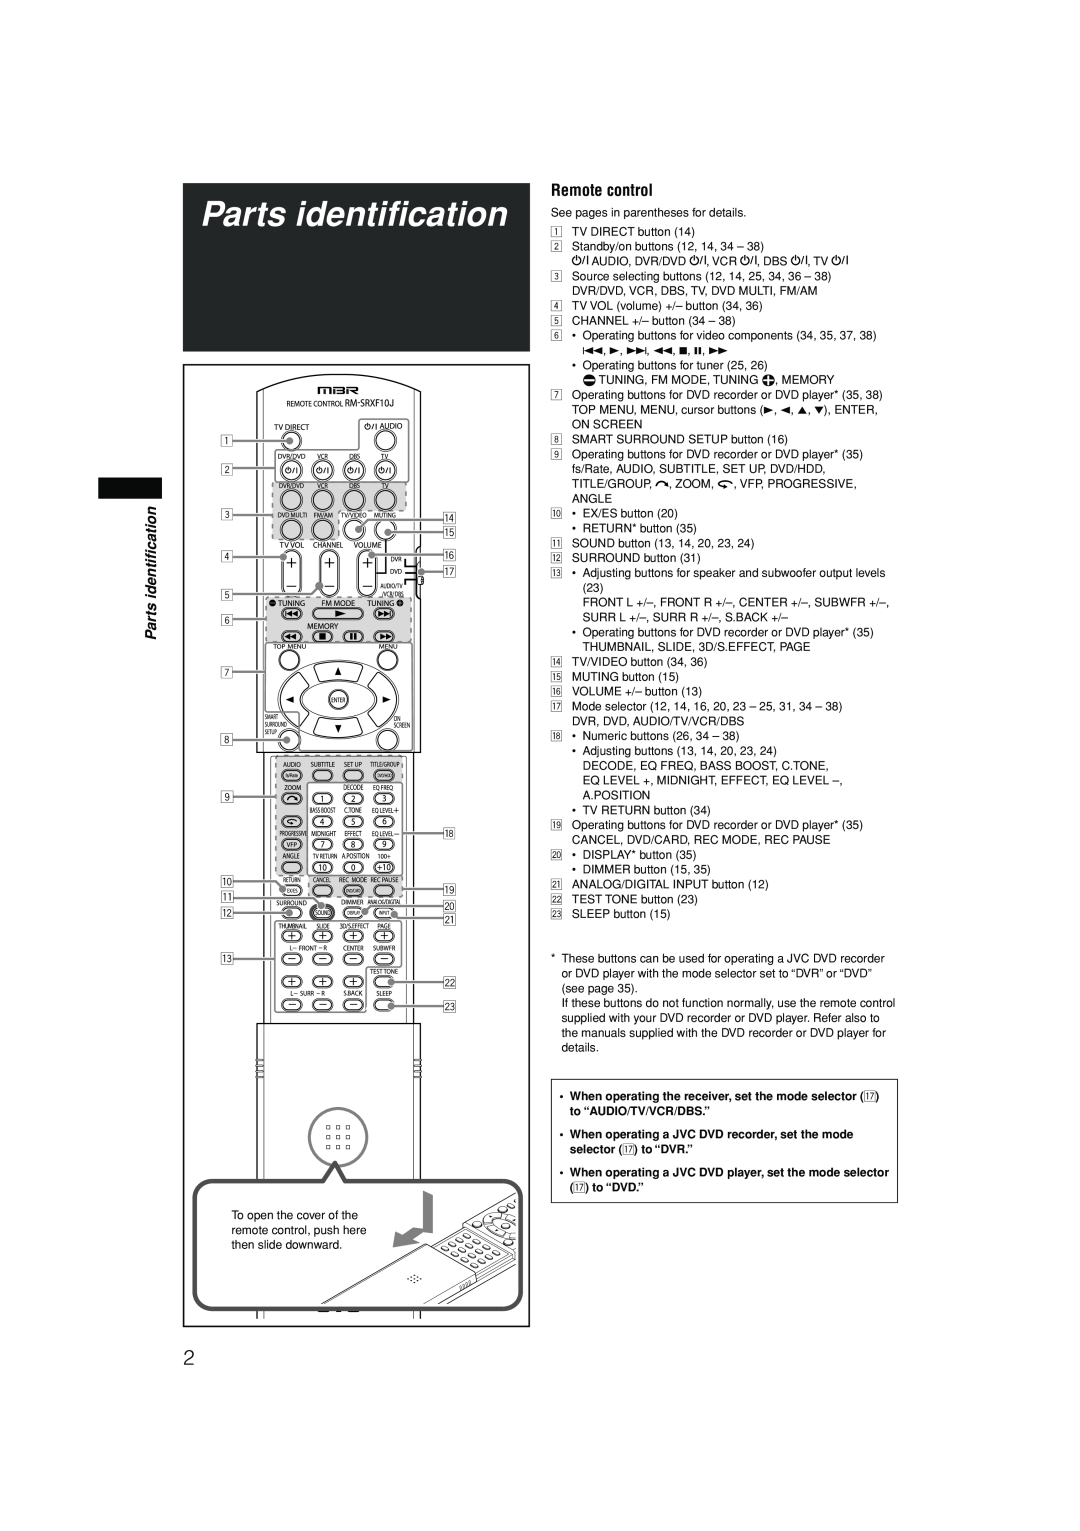 JVC RX-F10S manual Parts identification, Remote control 